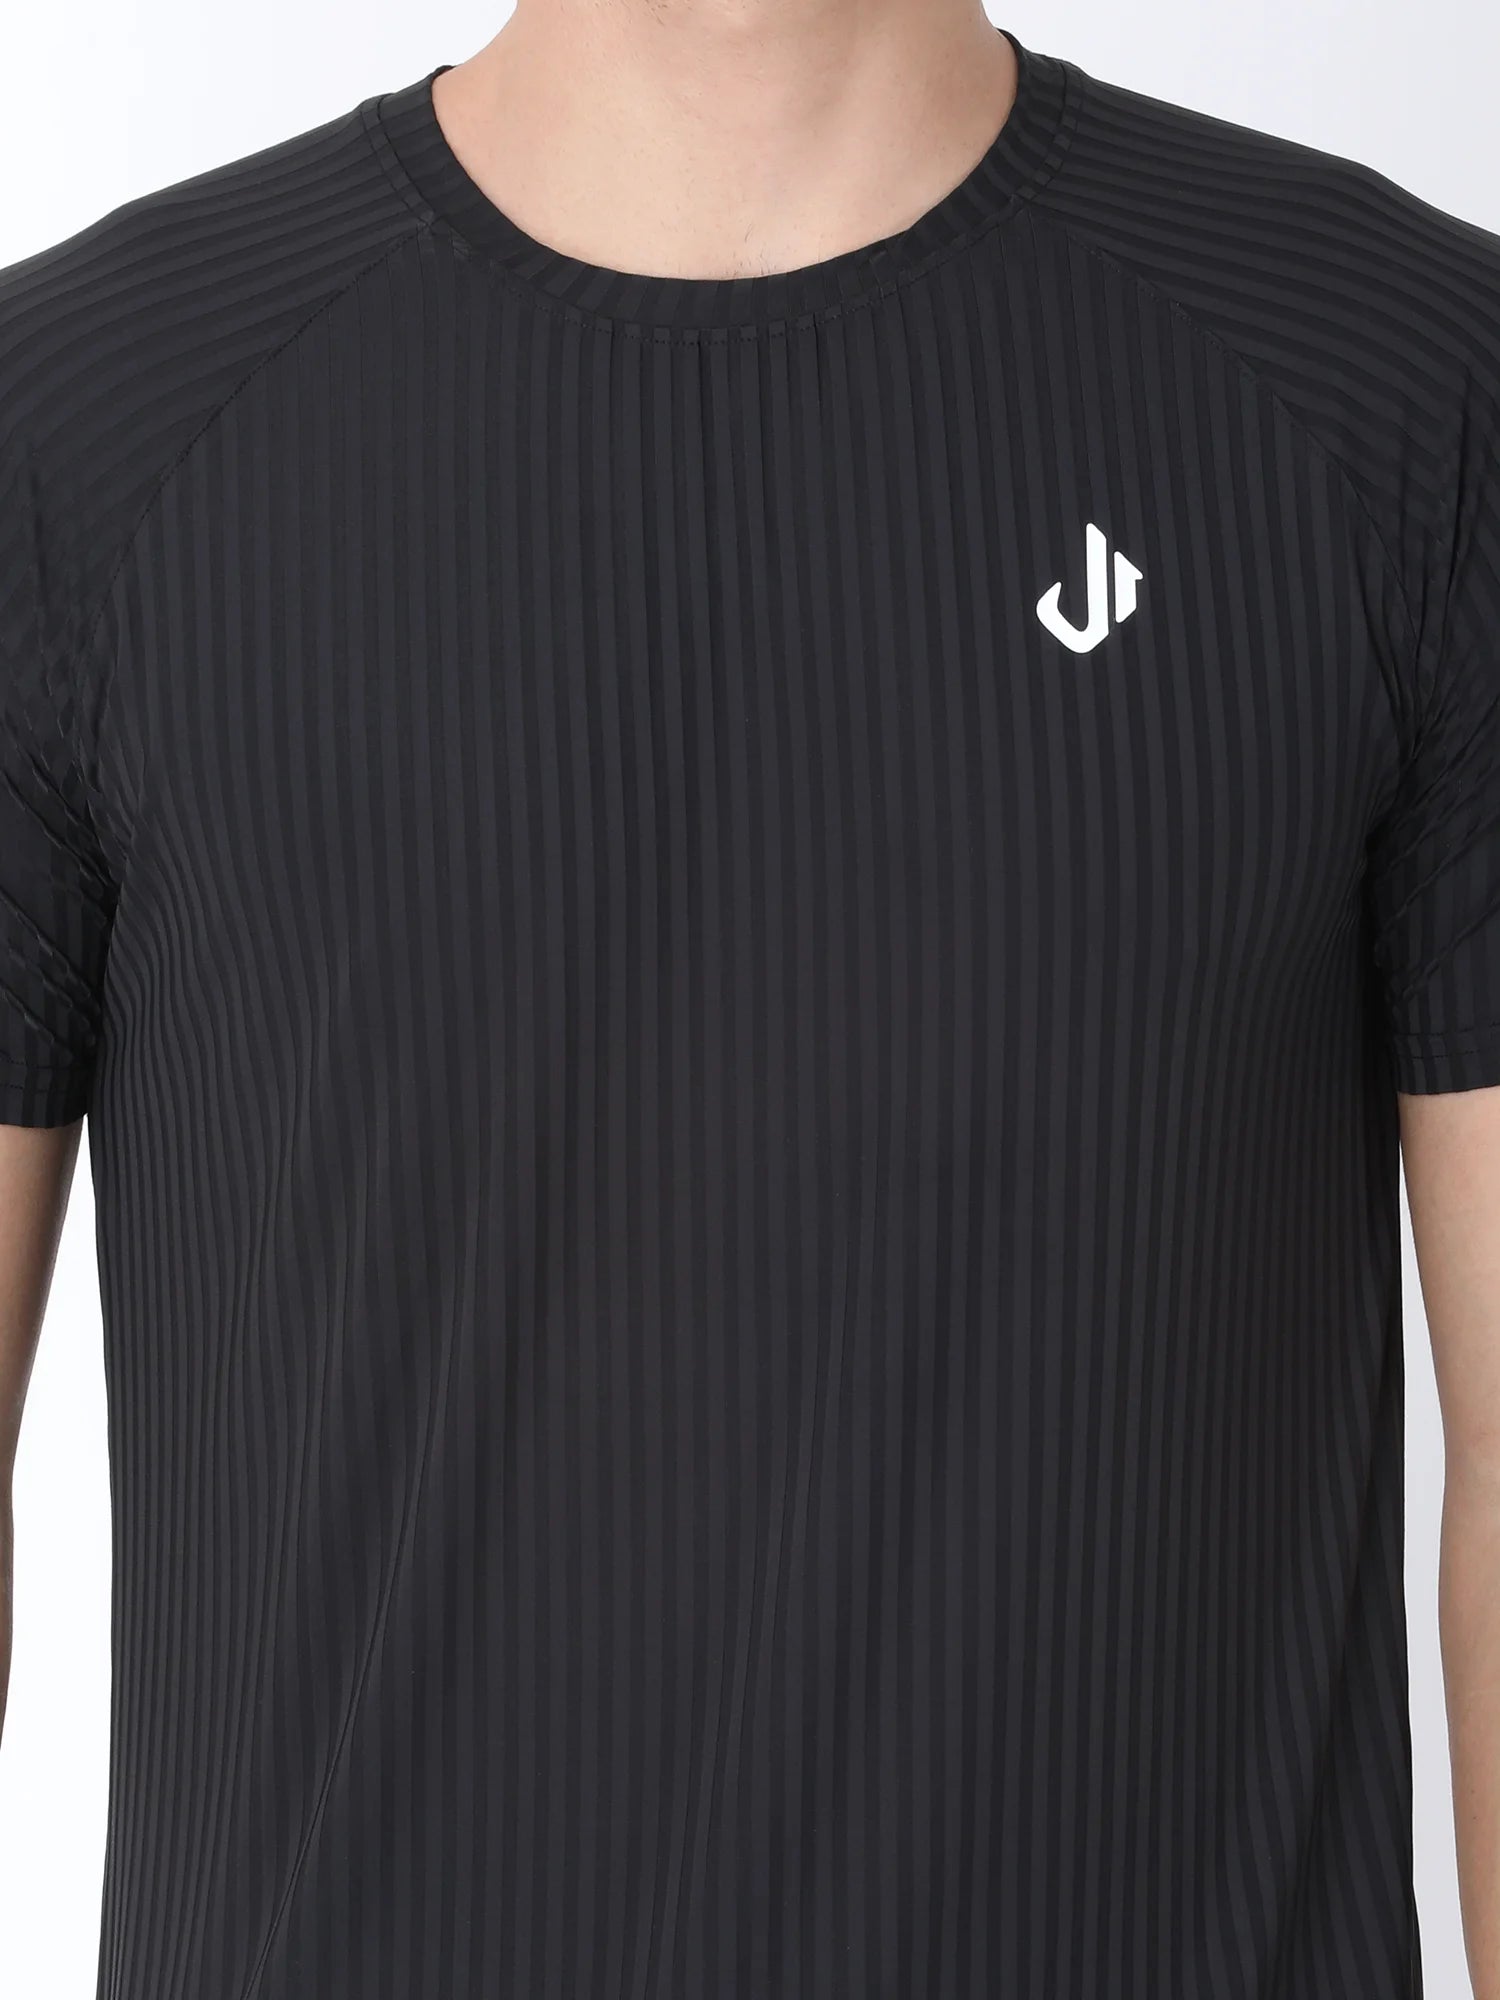 Jeffa Fit Fusion Nylon T-shirt in Black